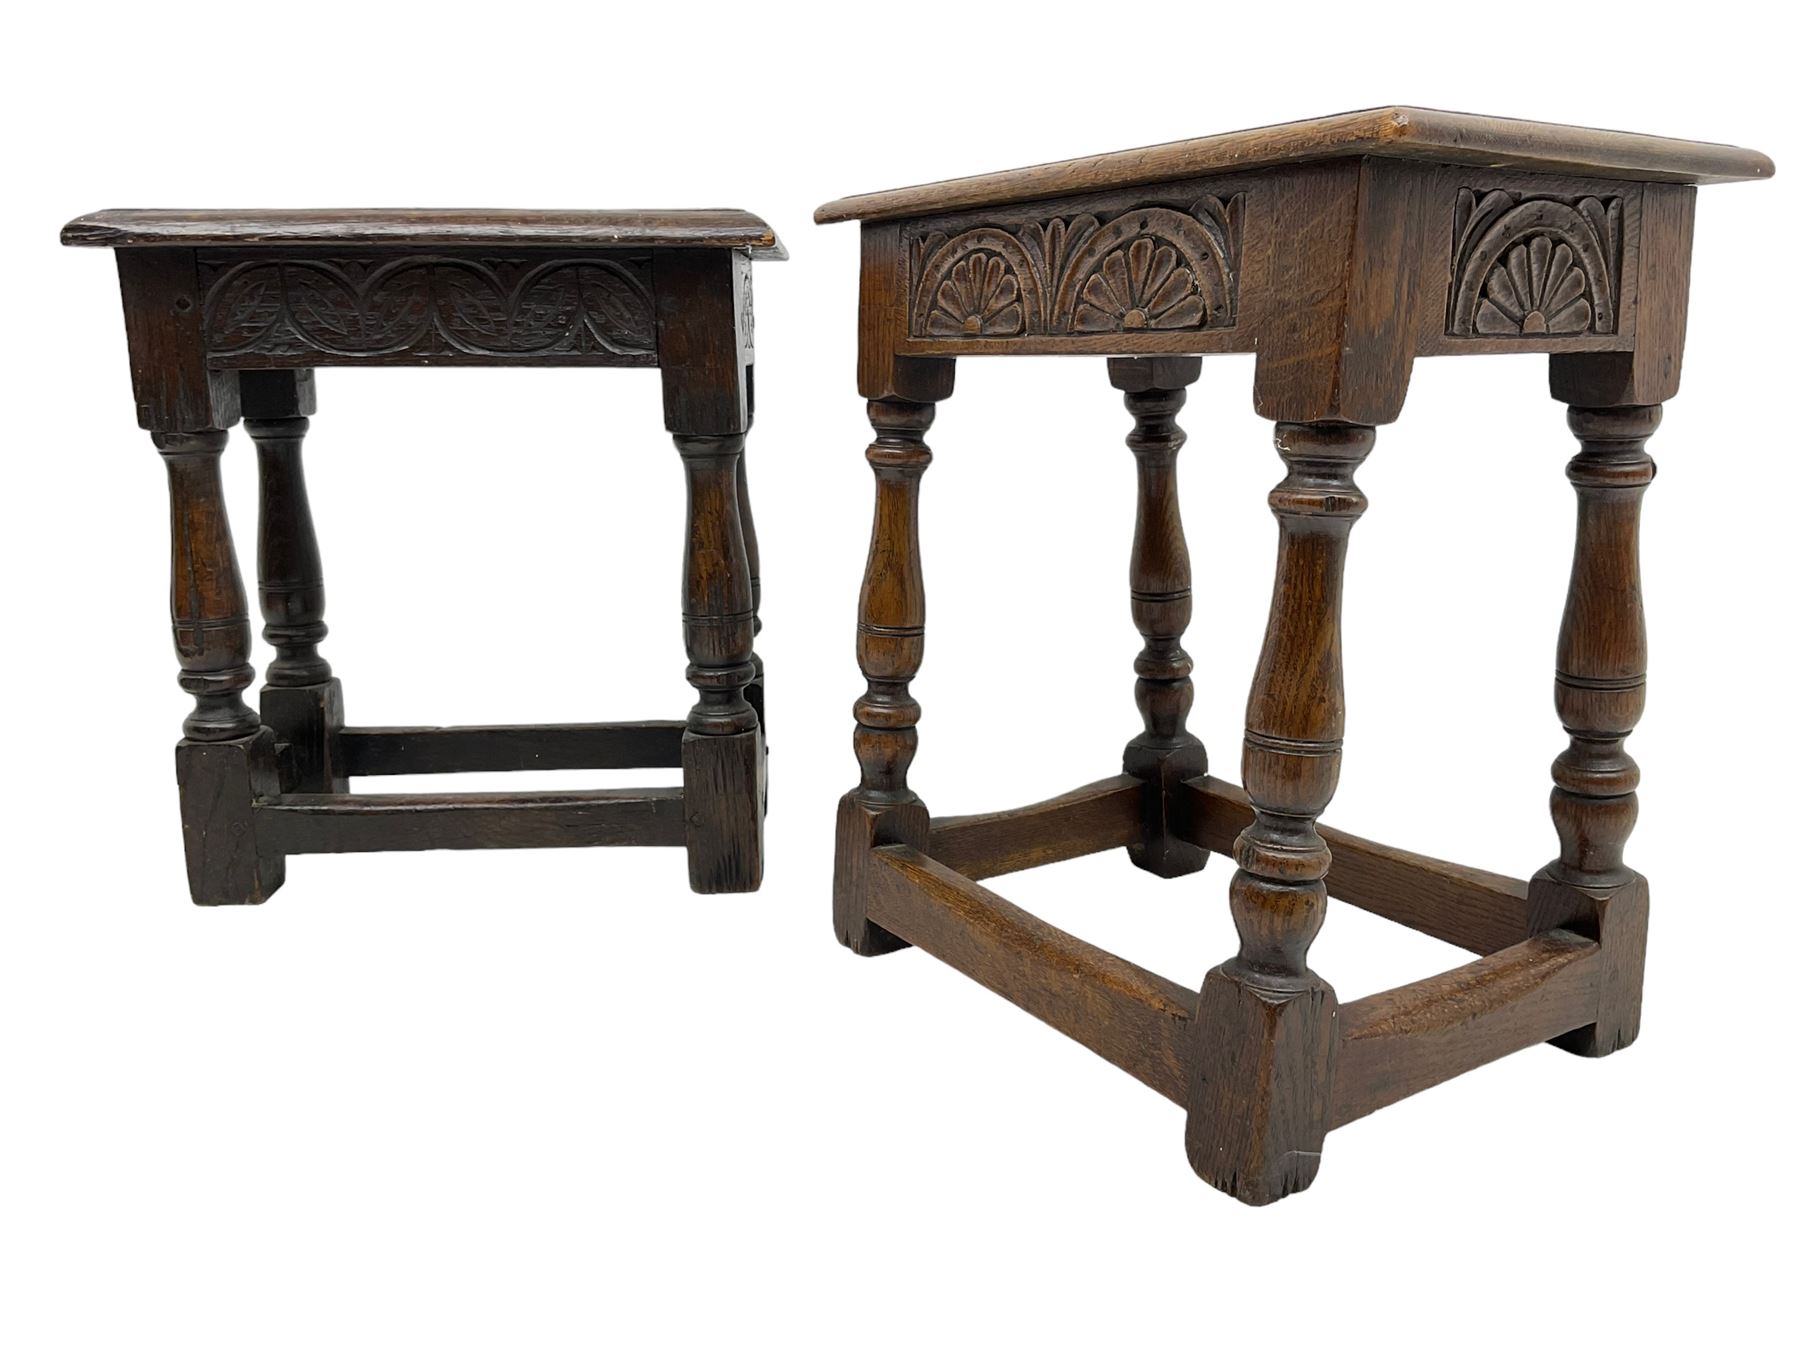 17th century design oak stool - Image 4 of 5